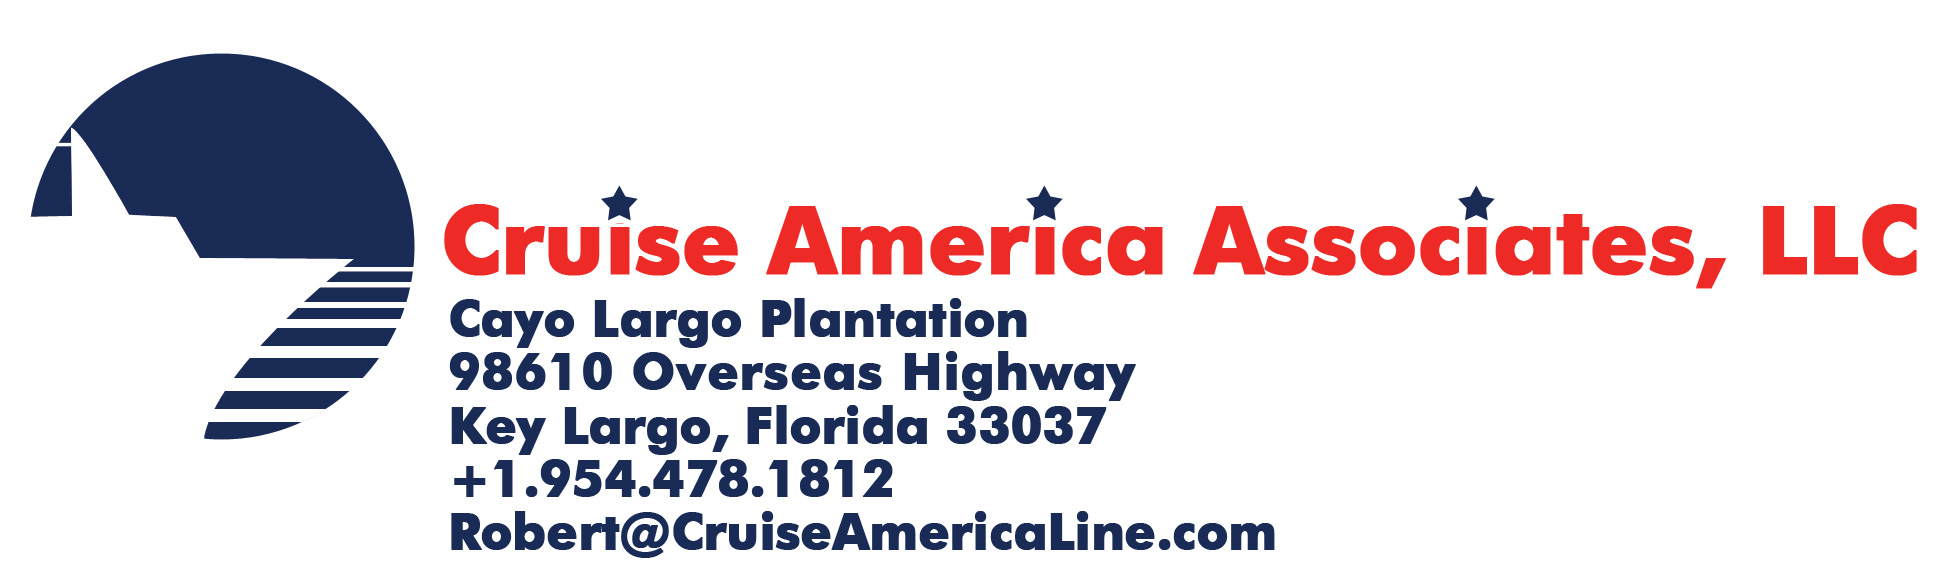 Cruise America Associates LLC